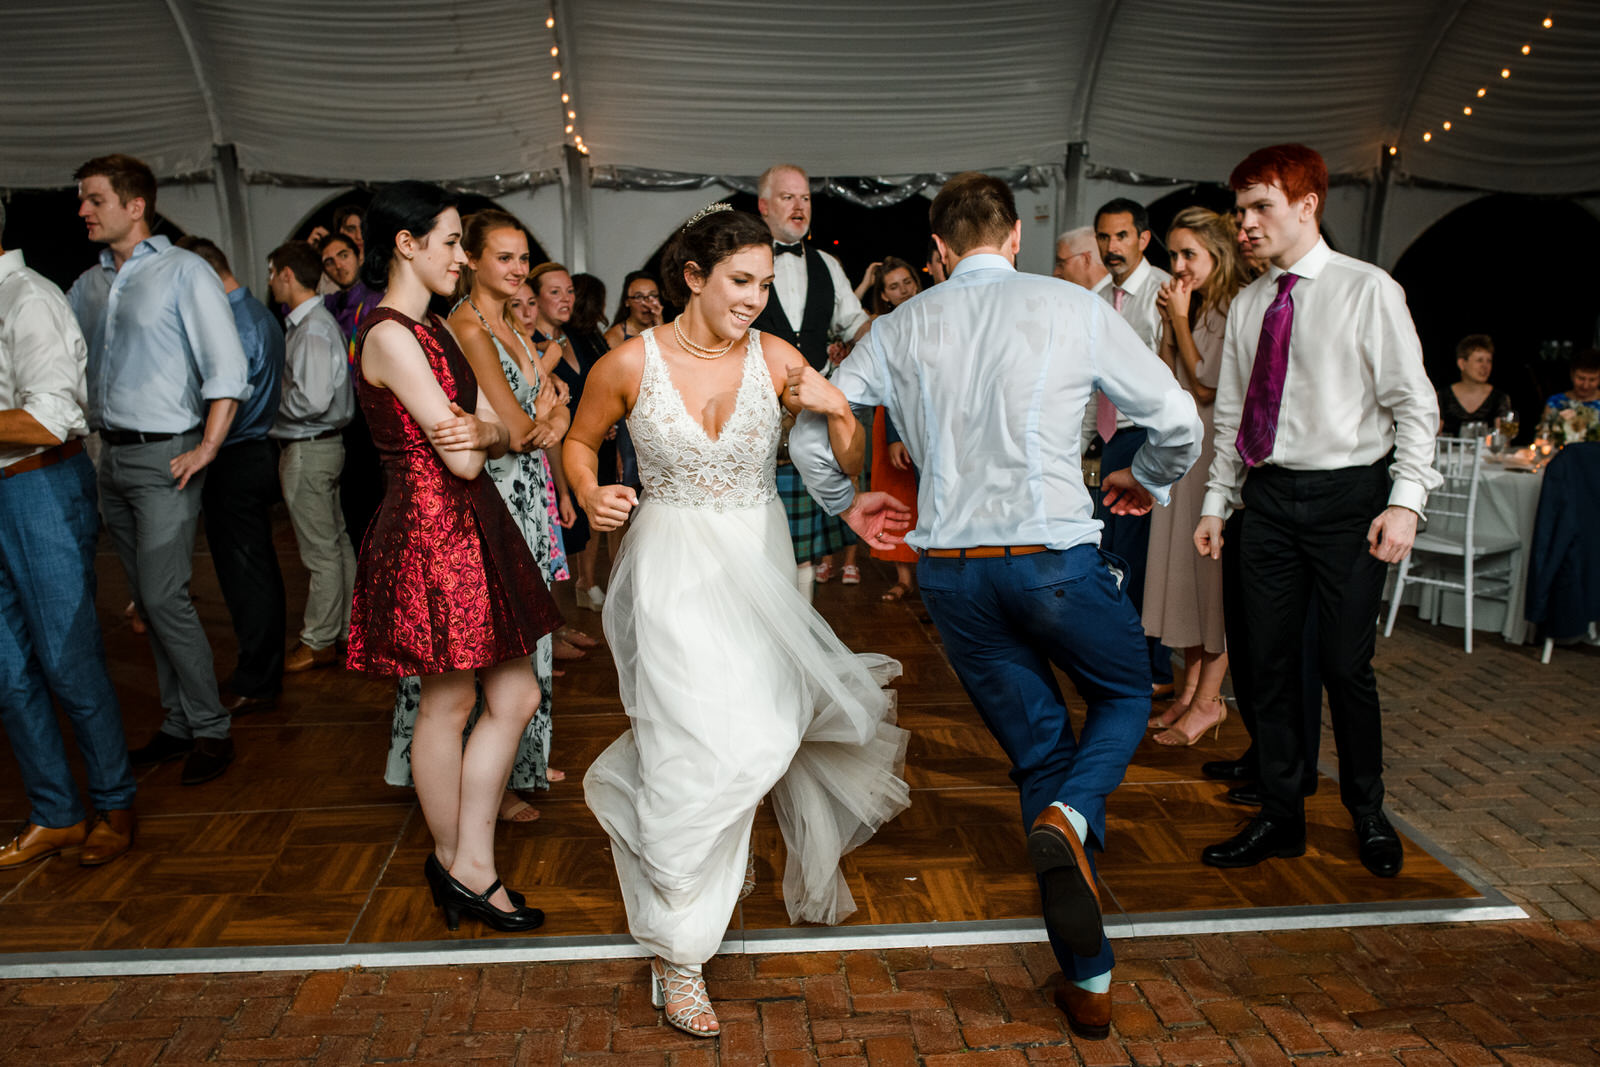 scottish dancing at reception